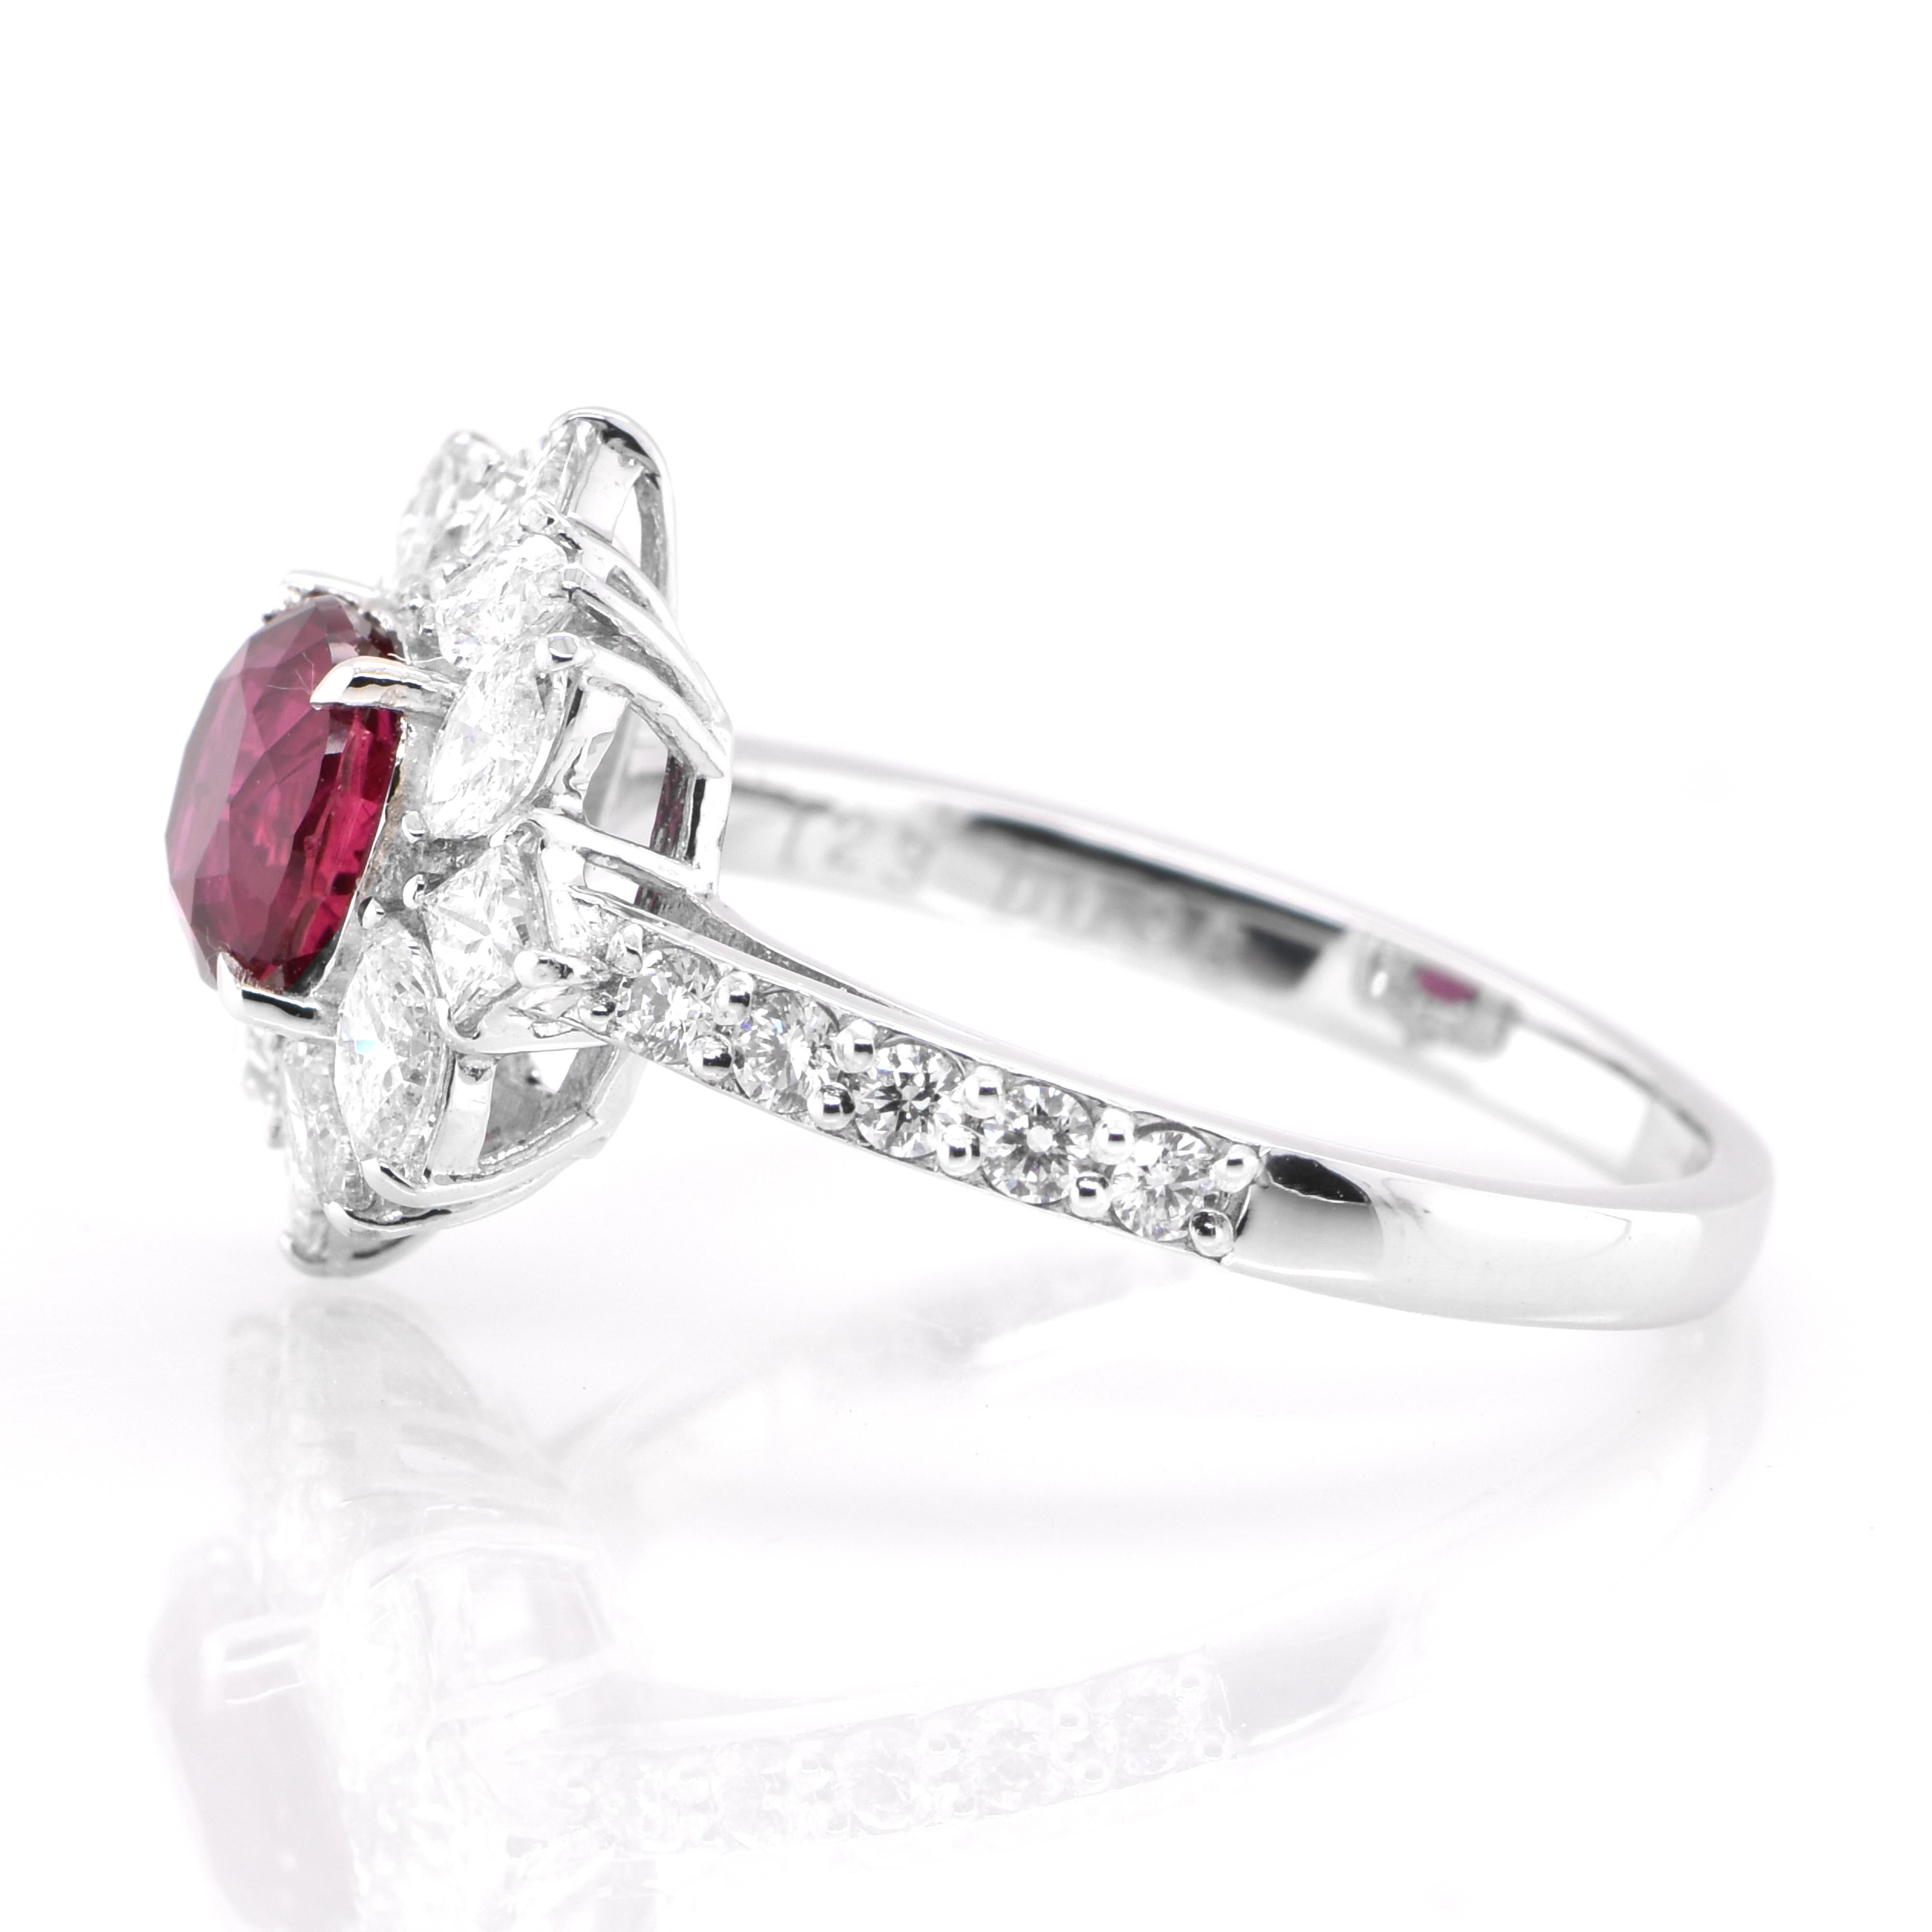 Cushion Cut GIA Certified 1.23 Carat Natural Thai Ruby and Diamond Ring Set in Platinum